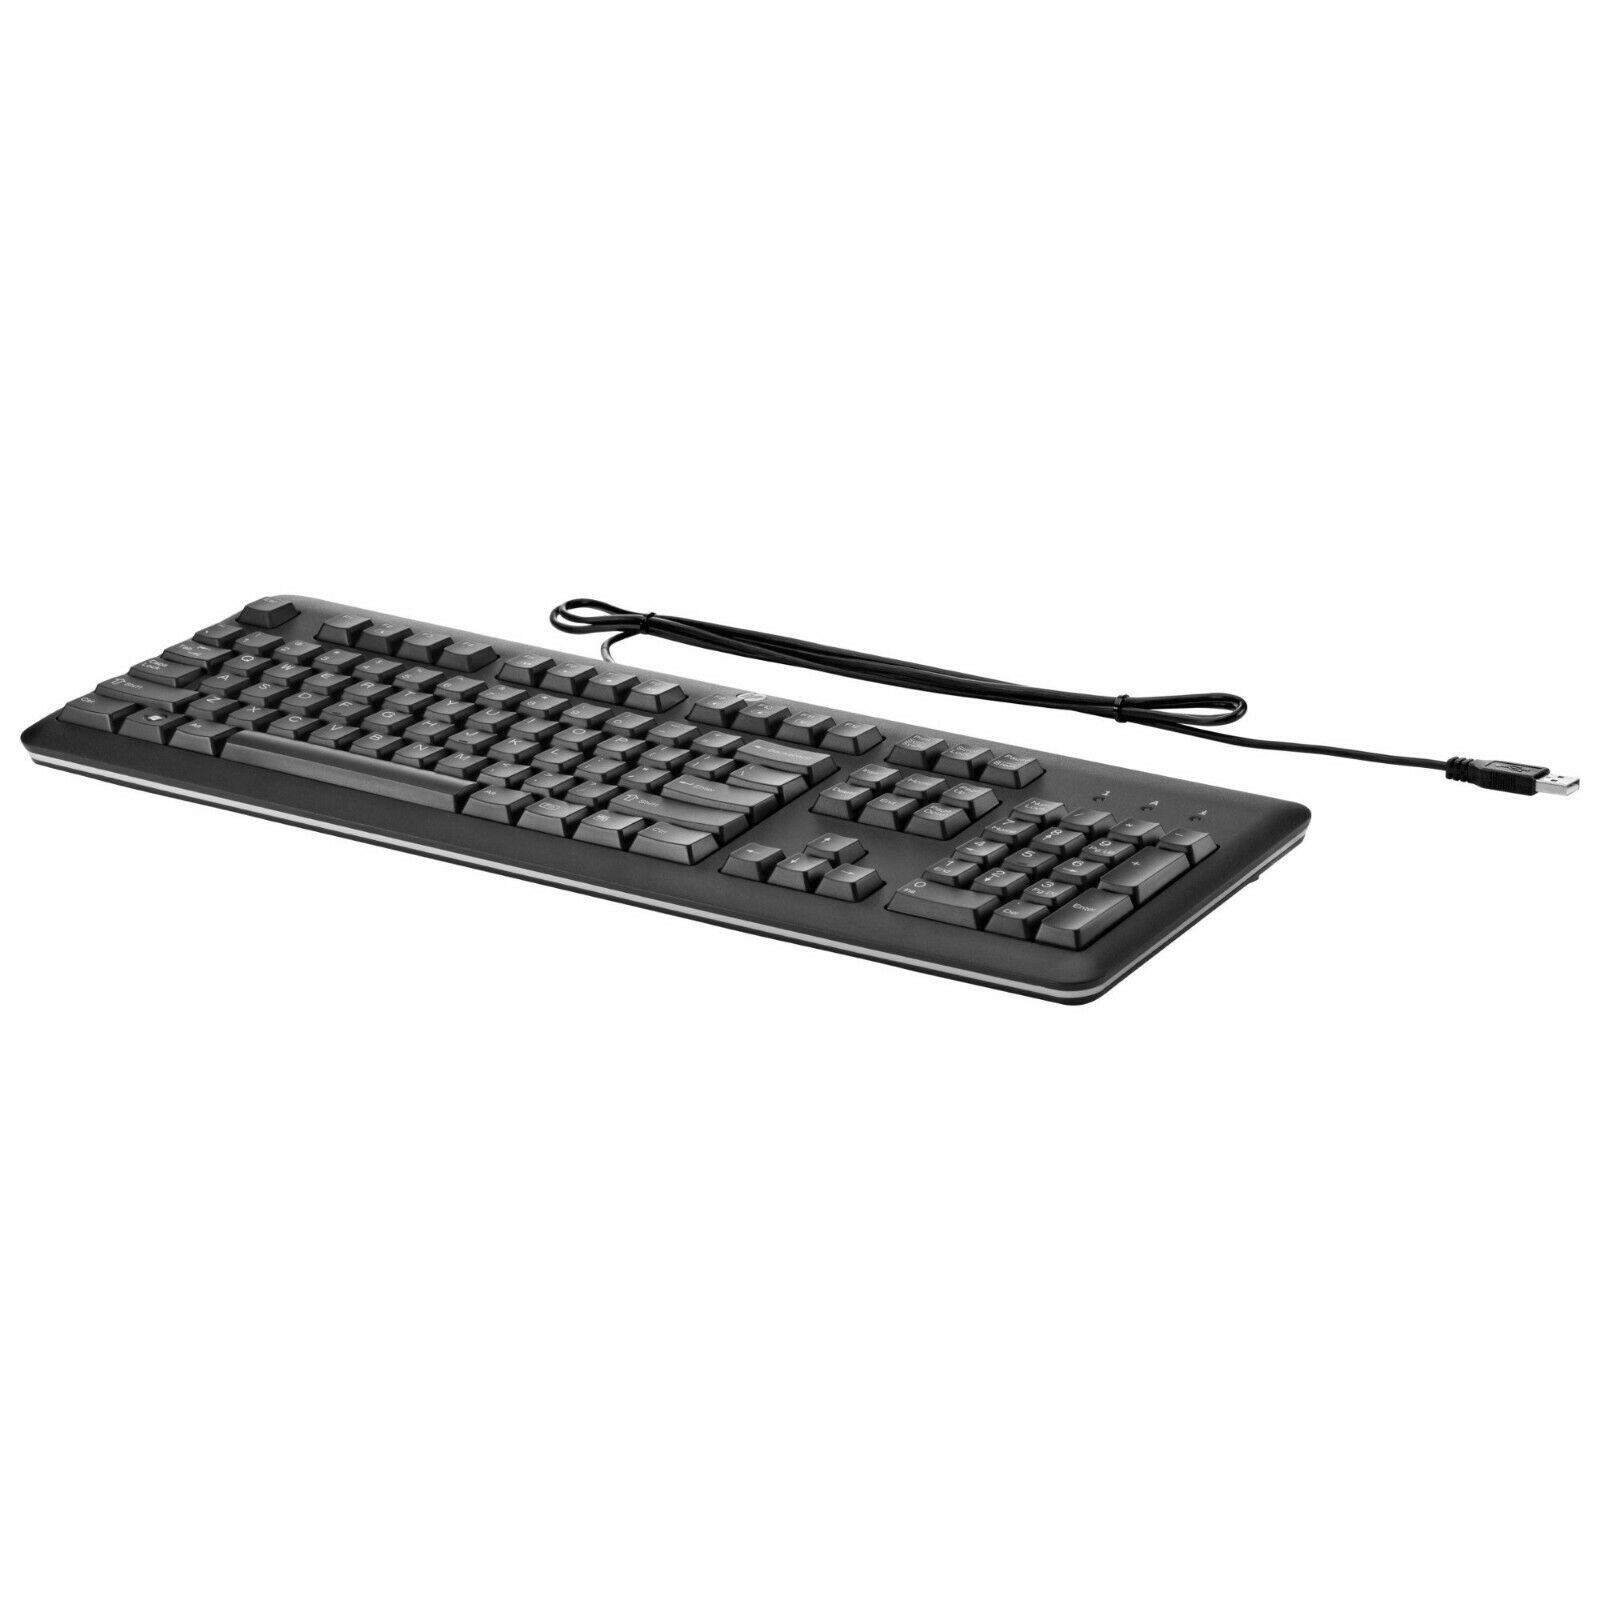 HP KU-1156 Full Size UK Black USB Keyboard New